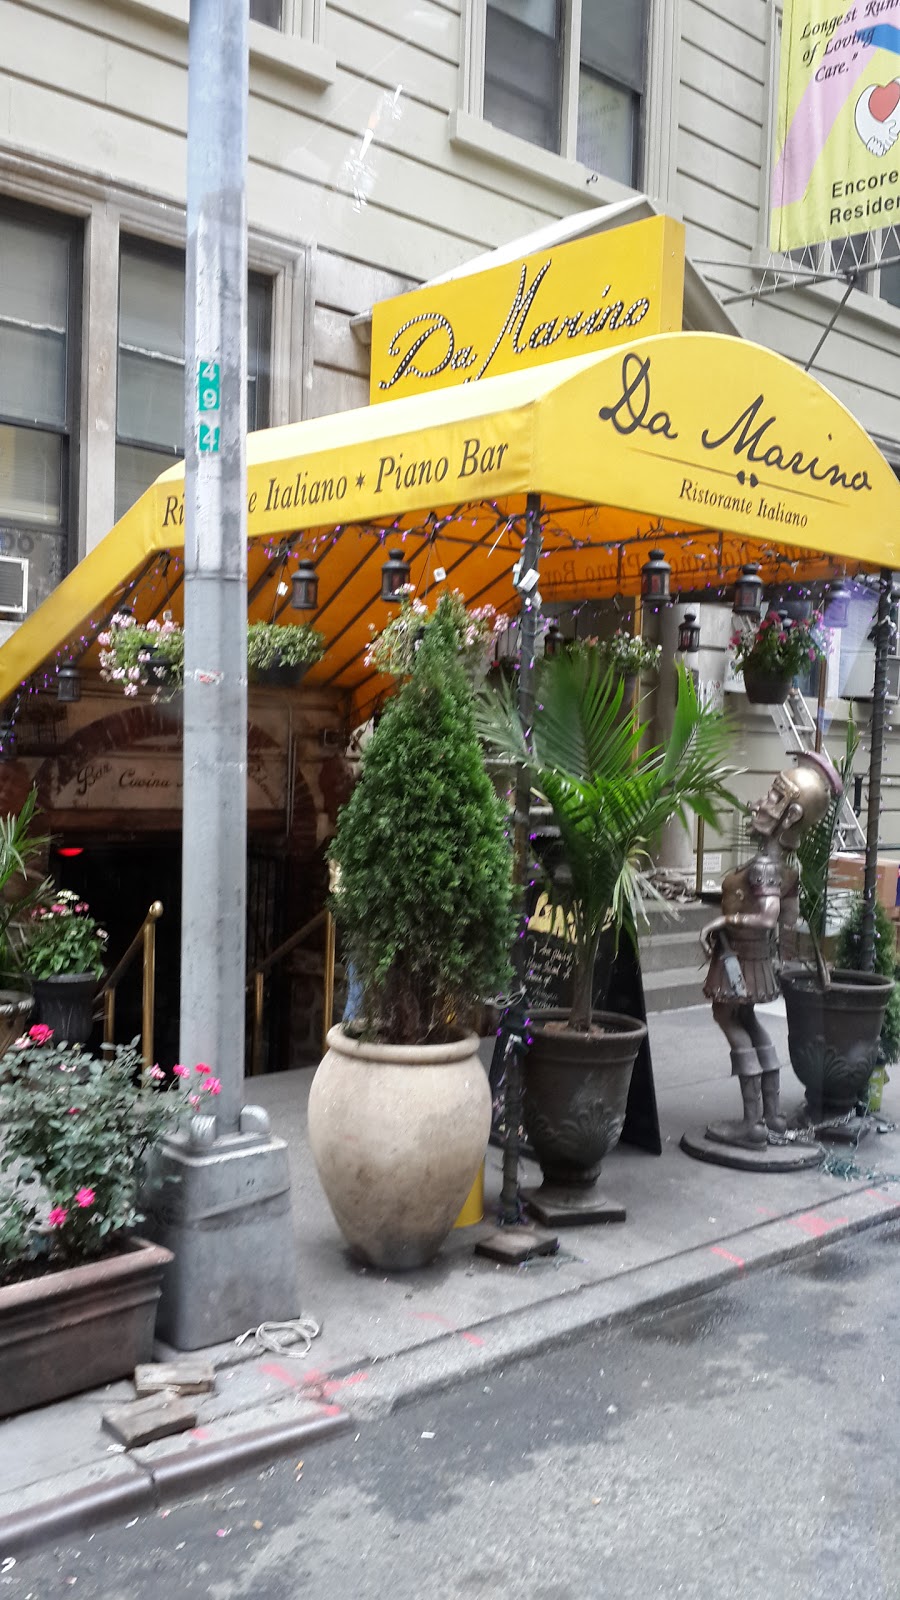 Photo of Da Marino in New York City, New York, United States - 2 Picture of Restaurant, Food, Point of interest, Establishment